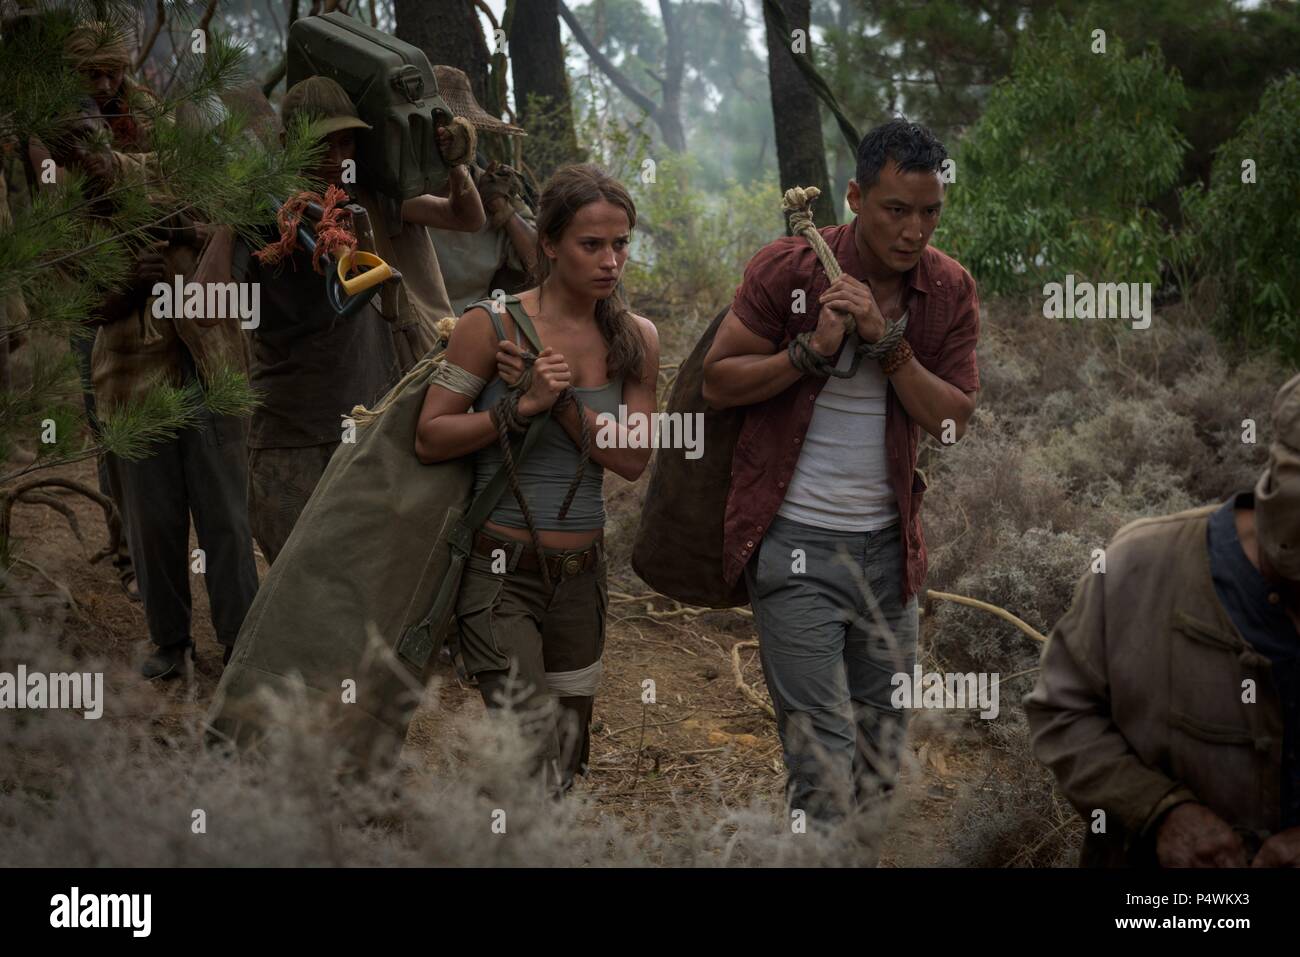 Photo: Roar Uthaug, and Alicia Vikander attend the Tomb Raider